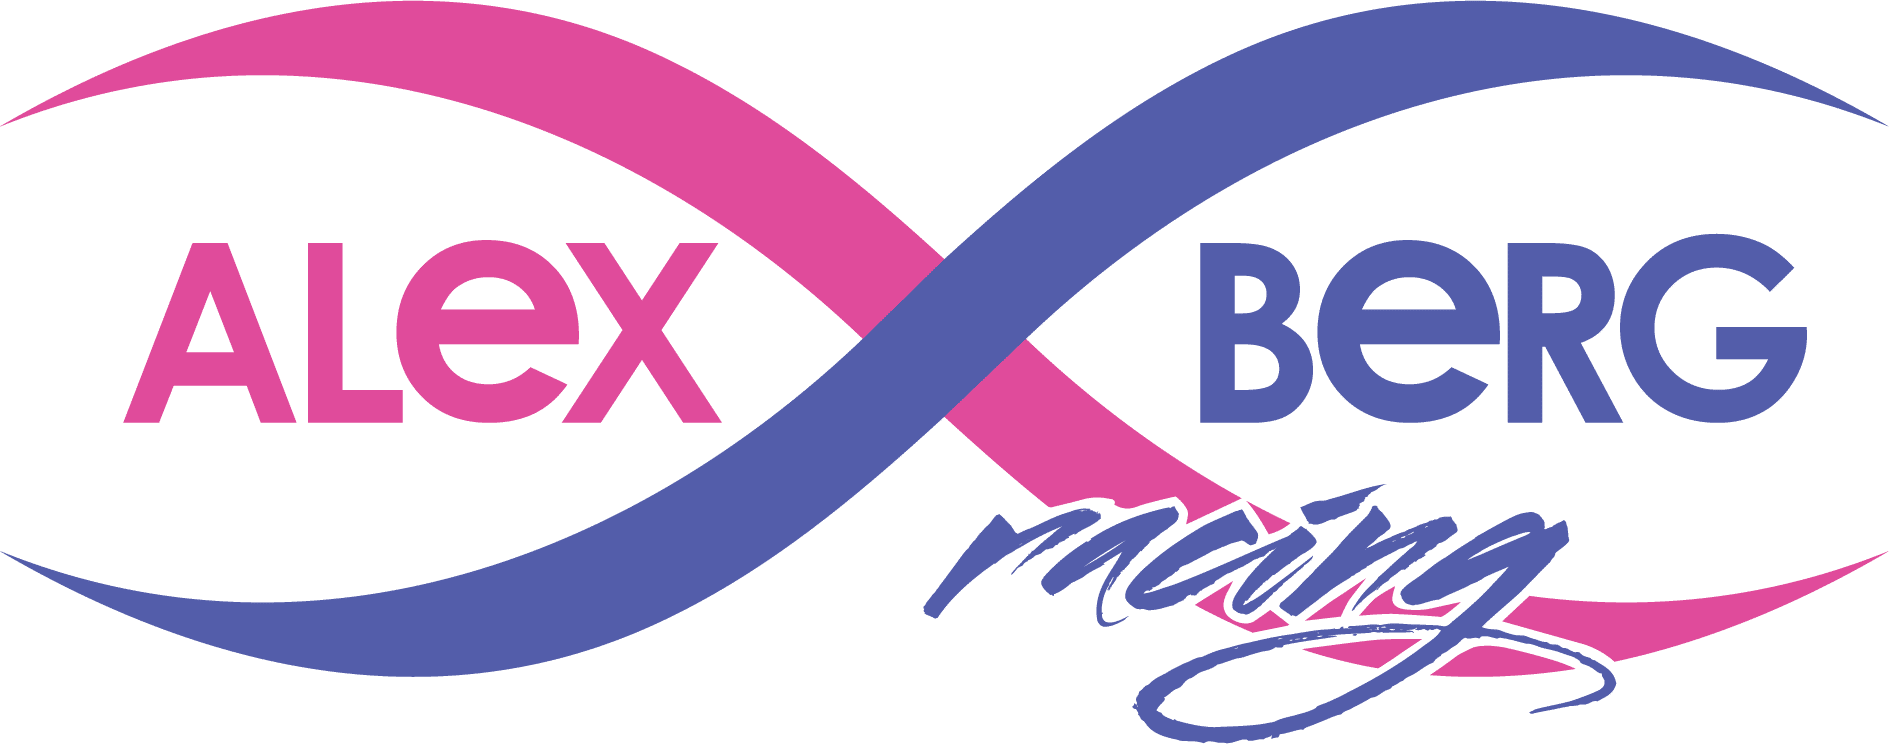 Alex berg racing logo